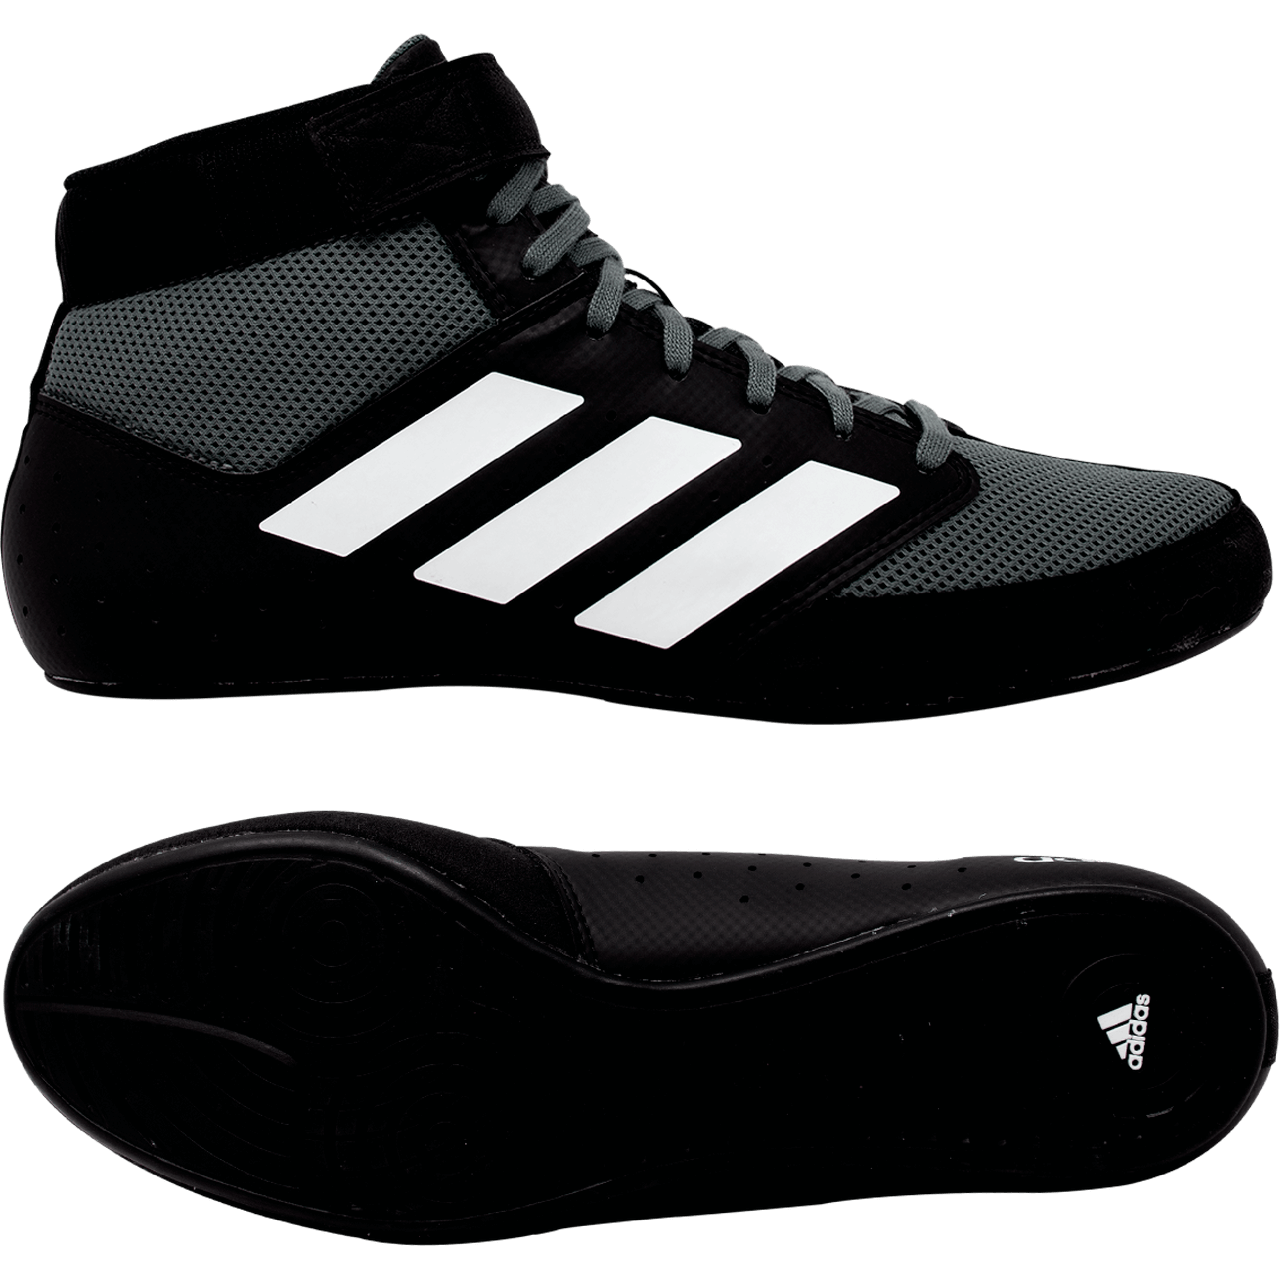 adidas Mat Hog 2.0 Wrestling Boots Black